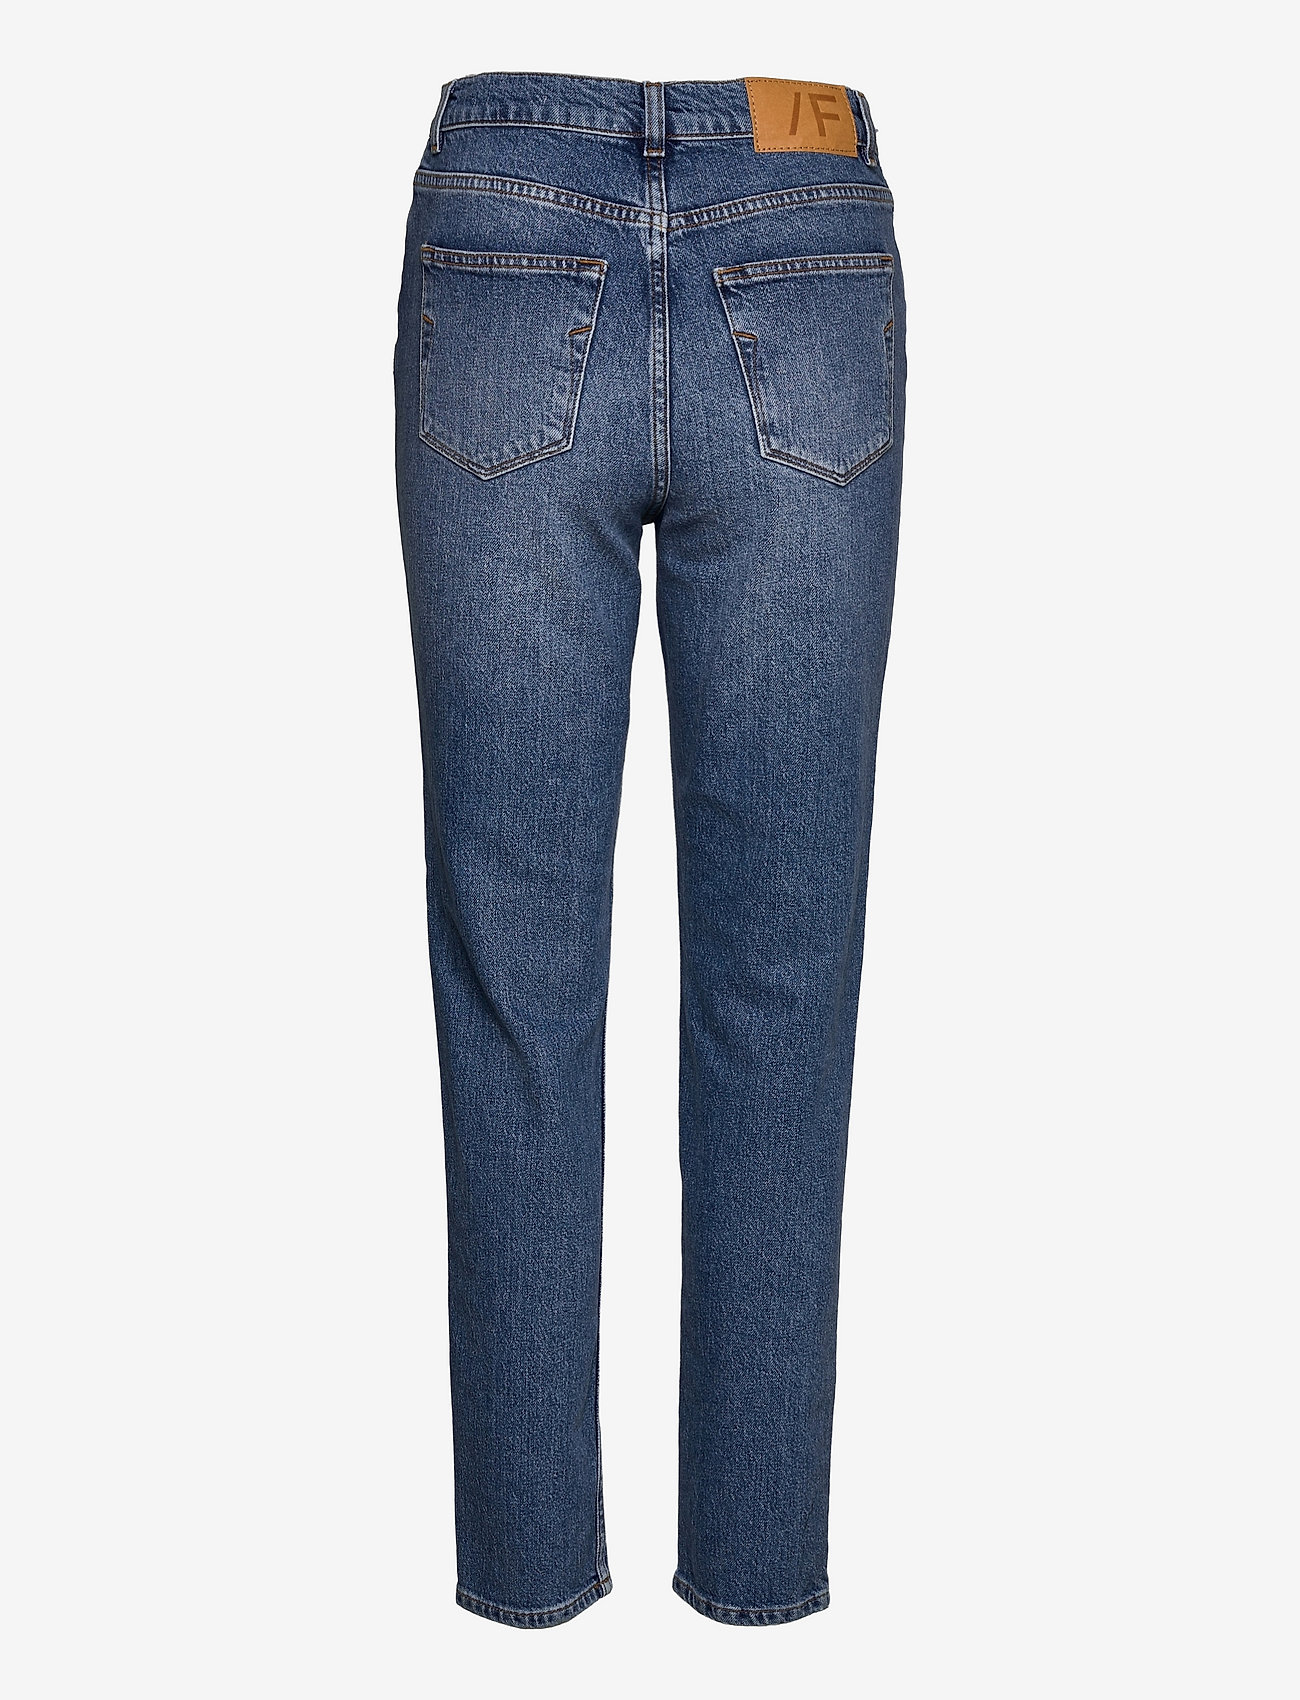 Selected Femme - SLFAMY HW SLIM CHAMBLY BLU JEANS U - slim jeans - medium blue denim - 1